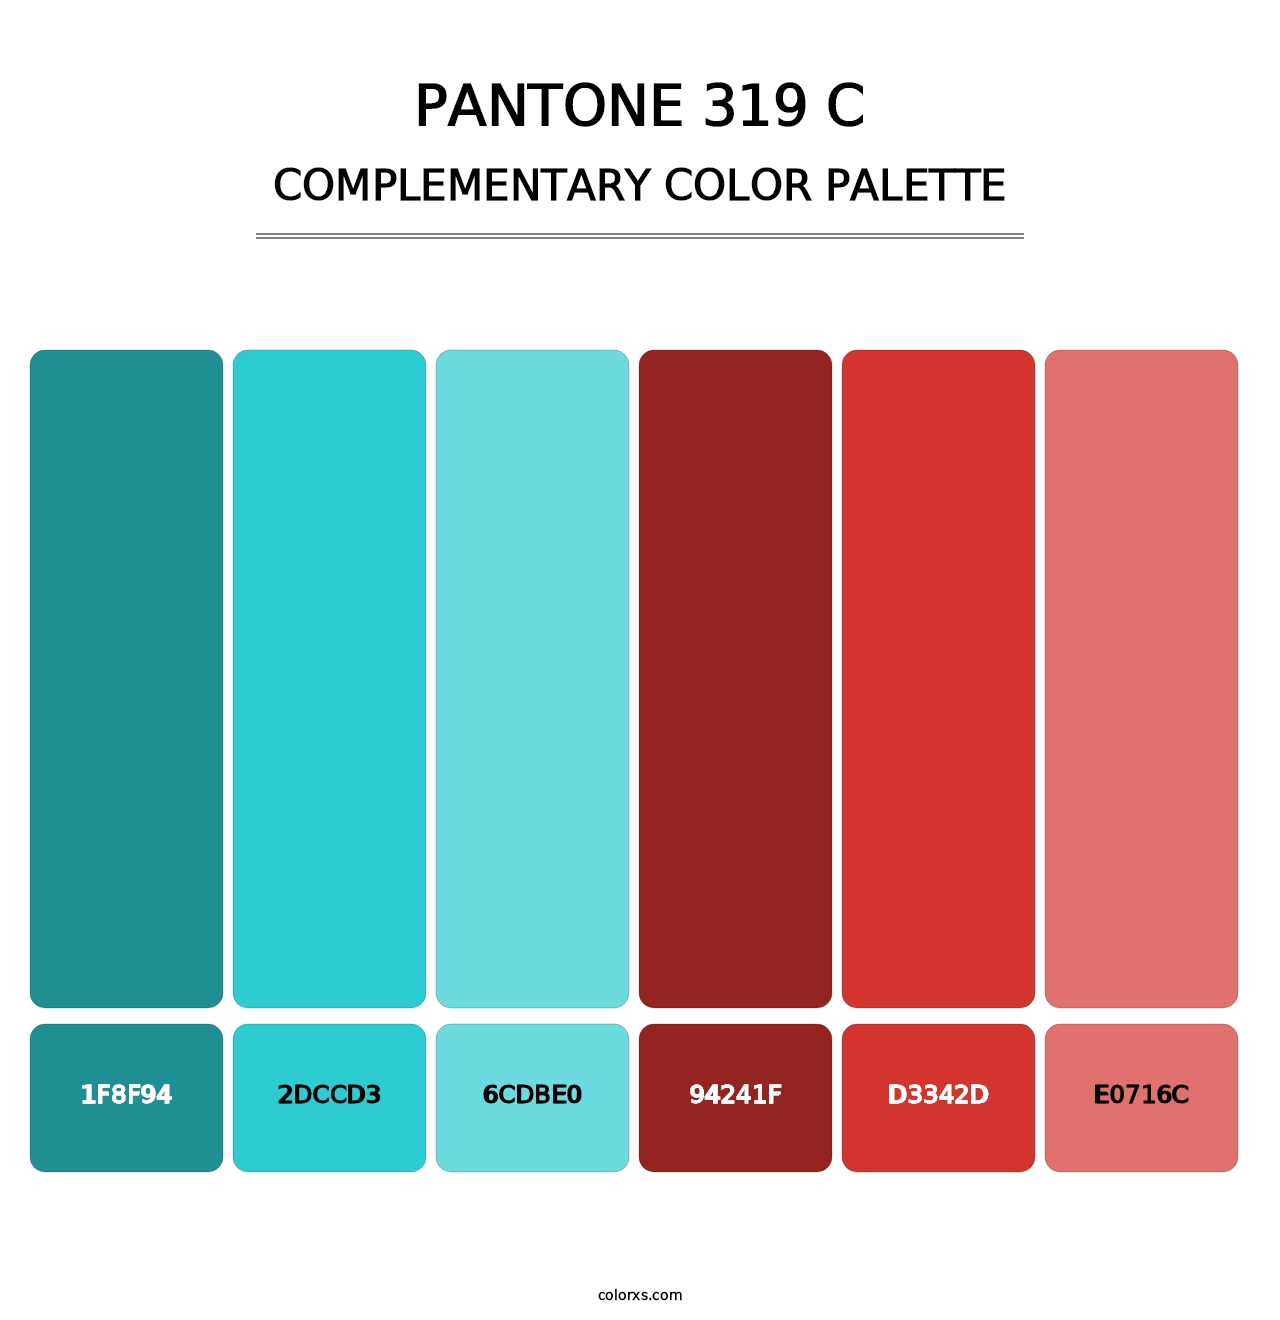 PANTONE 319 C - Complementary Color Palette